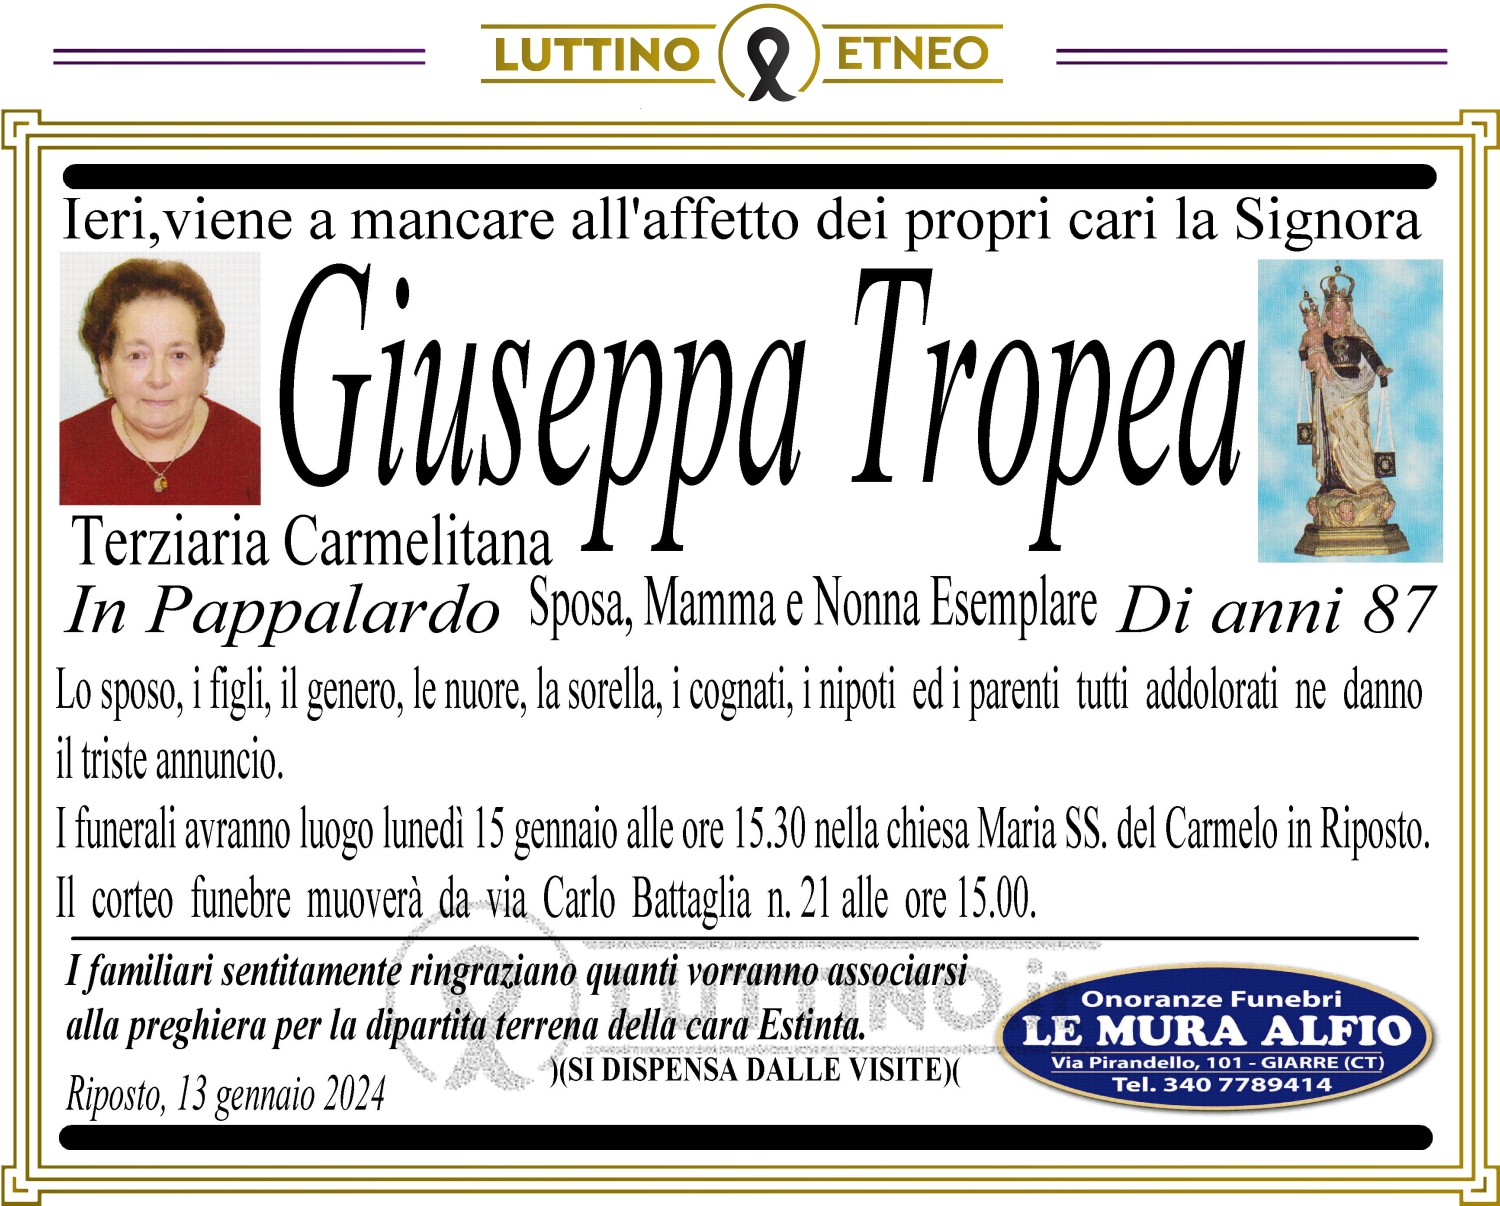 Giuseppa Tropea